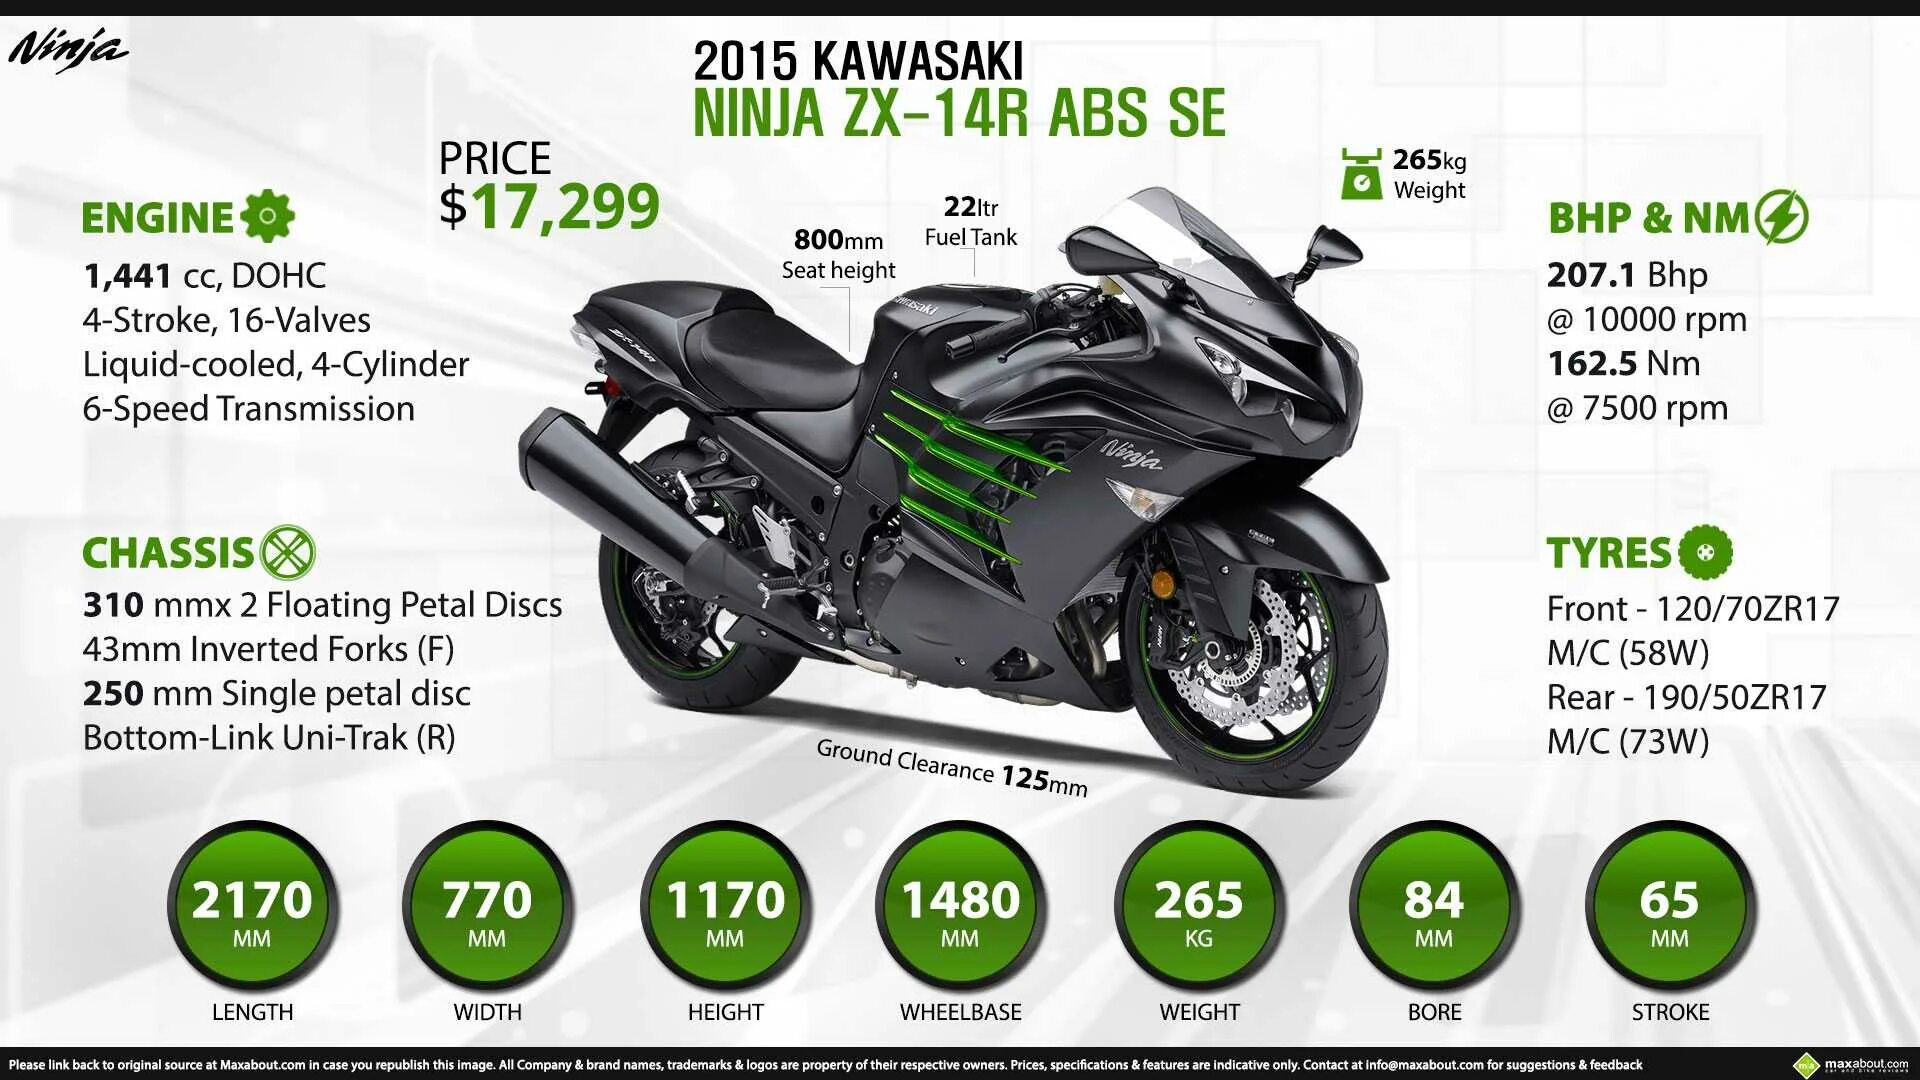 Сколько весит спортивный. Кавасаки ZX 14r характеристики. Kawasaki Ninja ZX 14r ABS se. Kawasaki Ninja ZX 14r характеристики. Мотоцикл Kawasaki Ninja 14r.